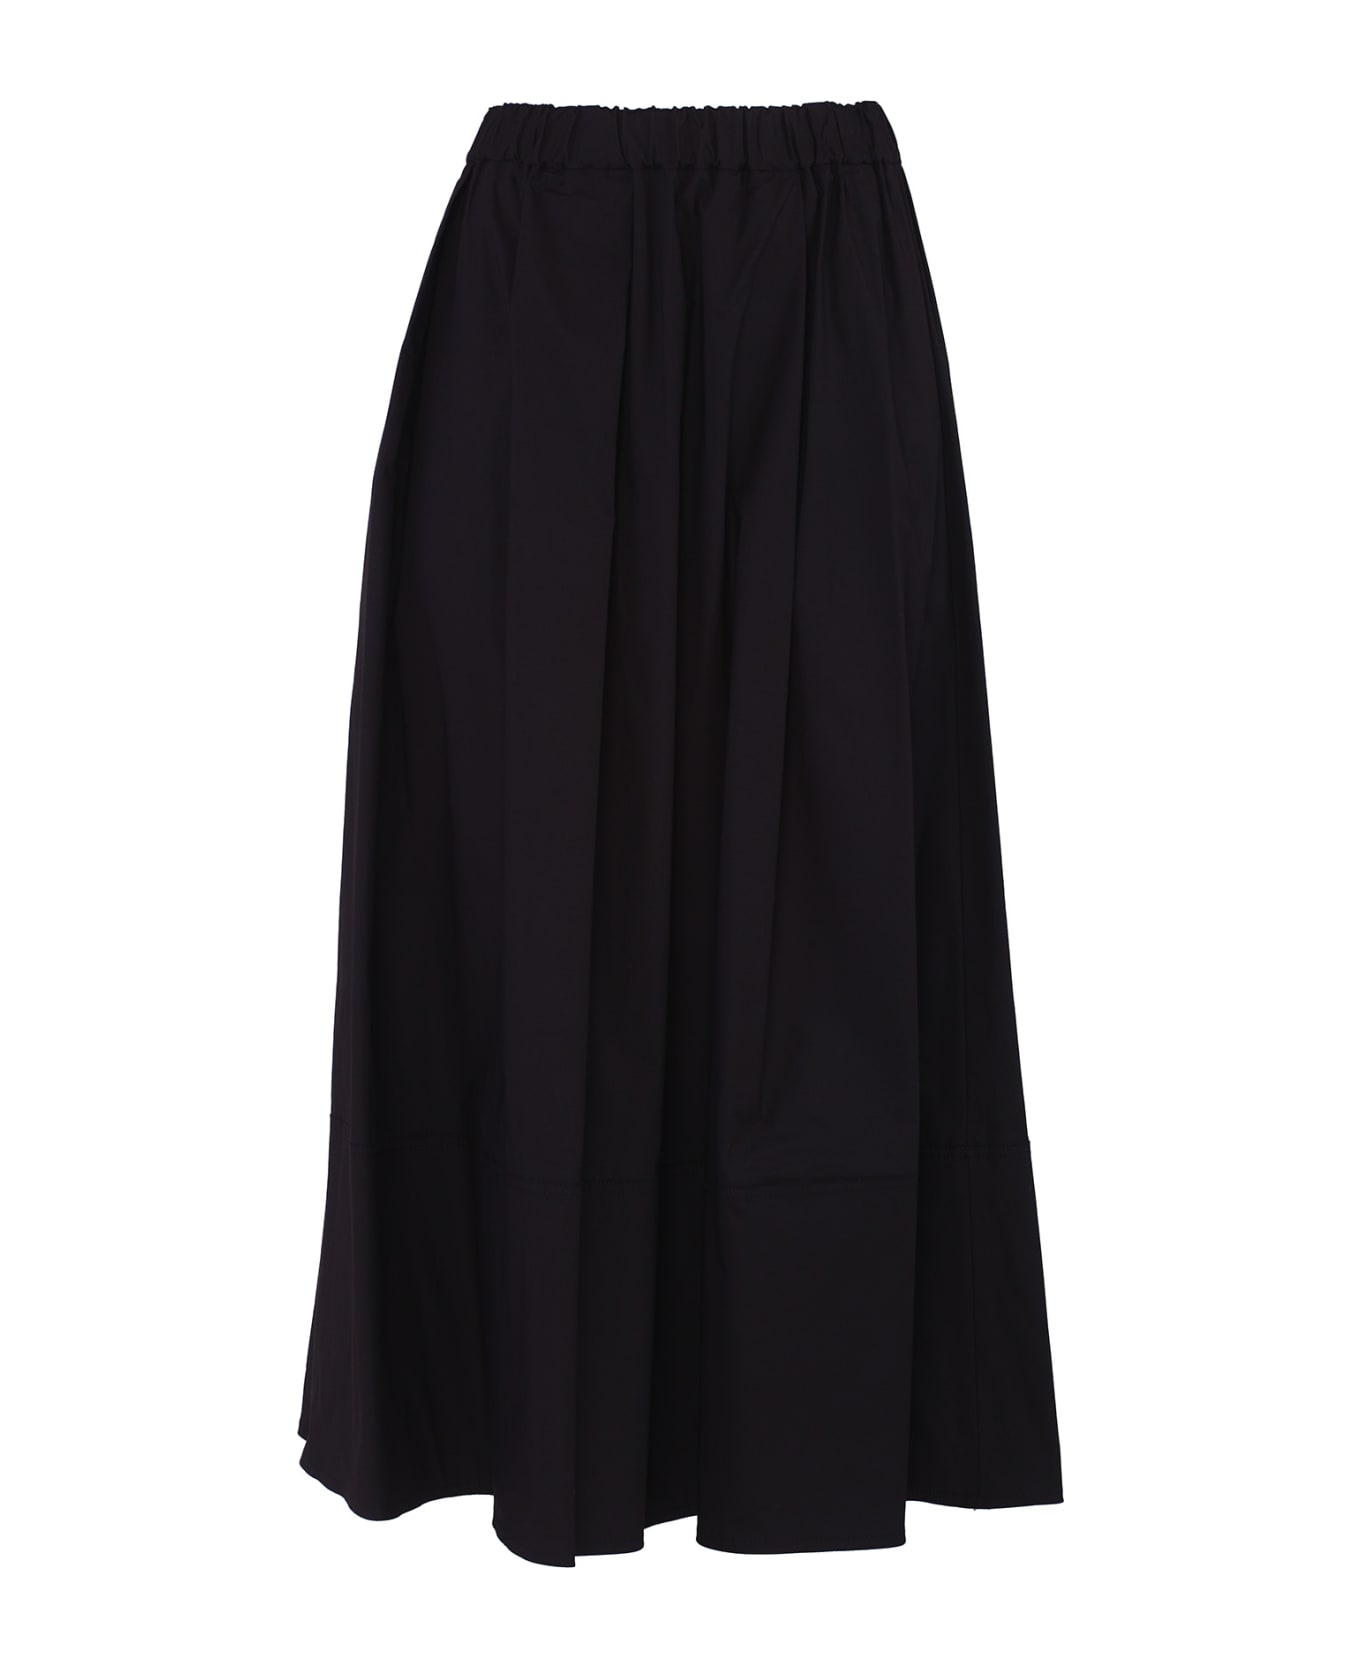 Antonelli Firenze Skirts Black - Black